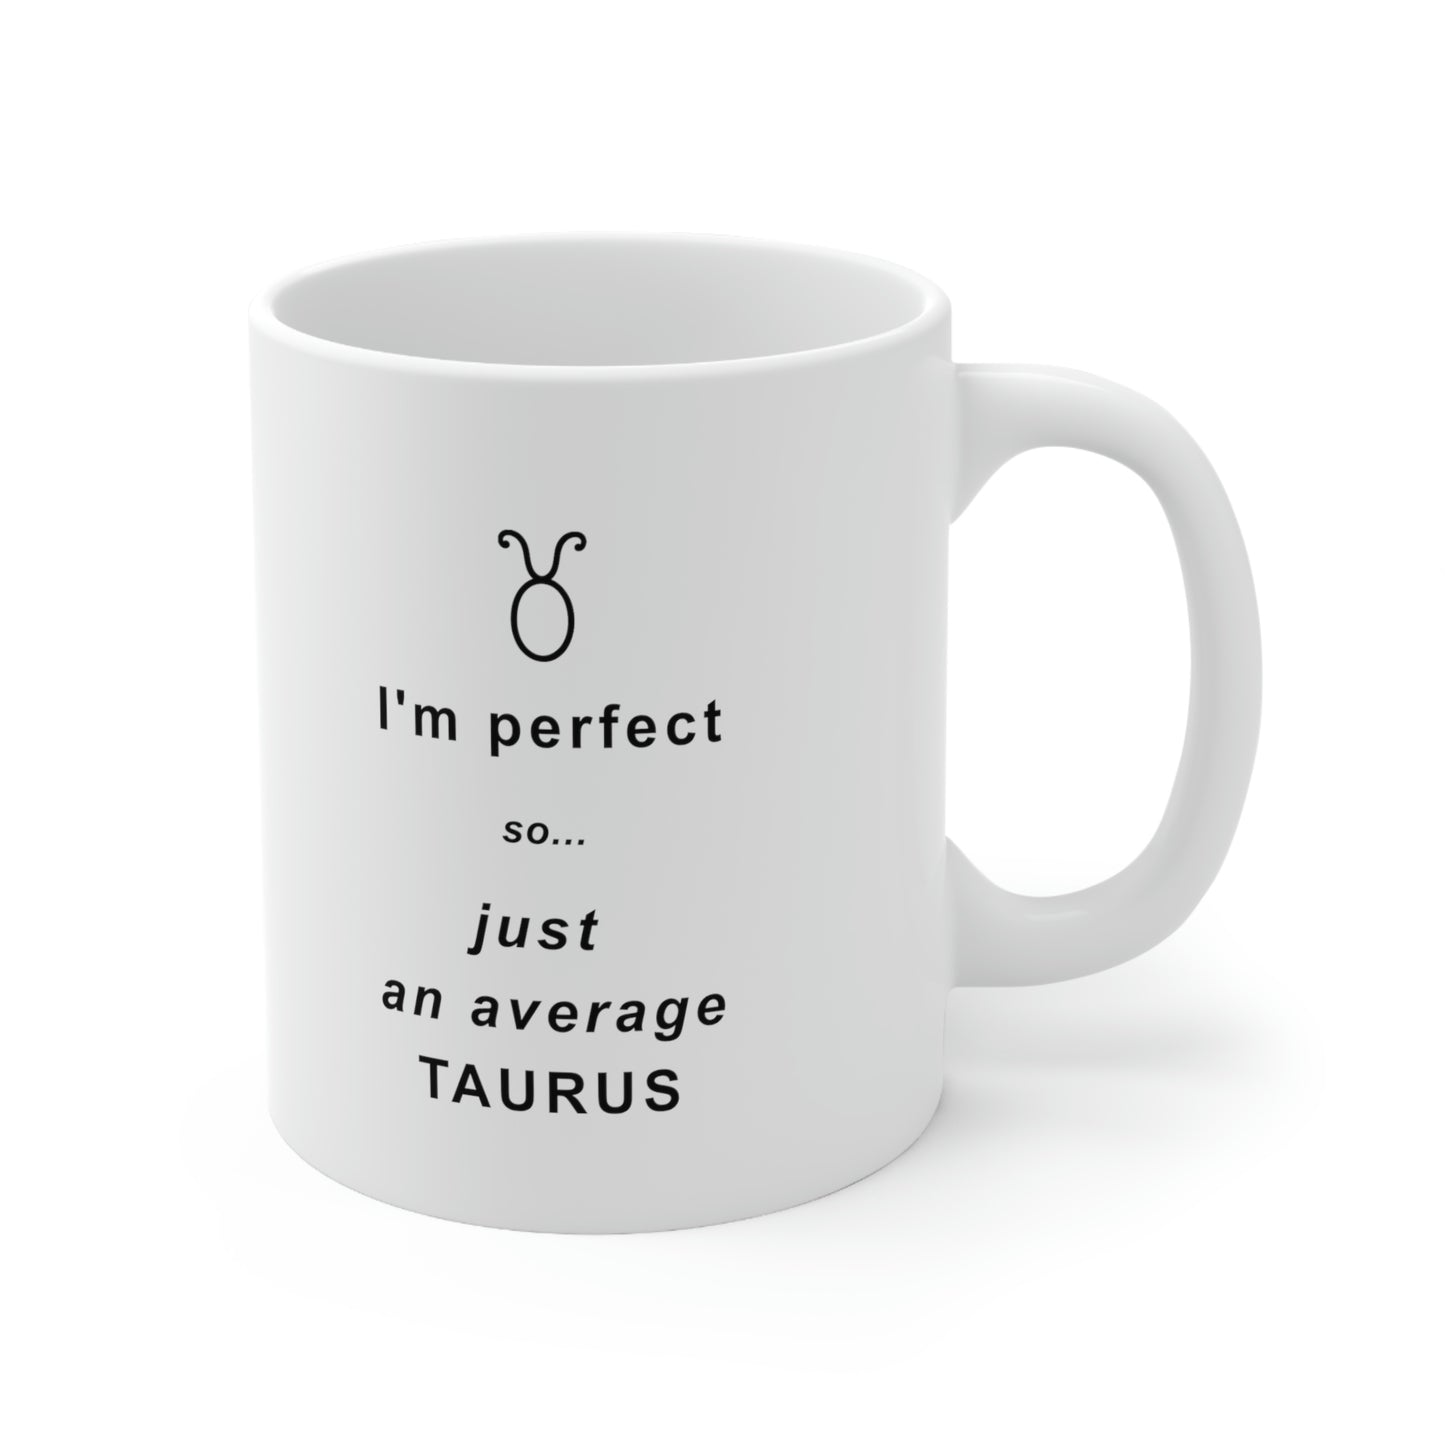 Taurus Mug: I'm perfect, so just an average Taurus